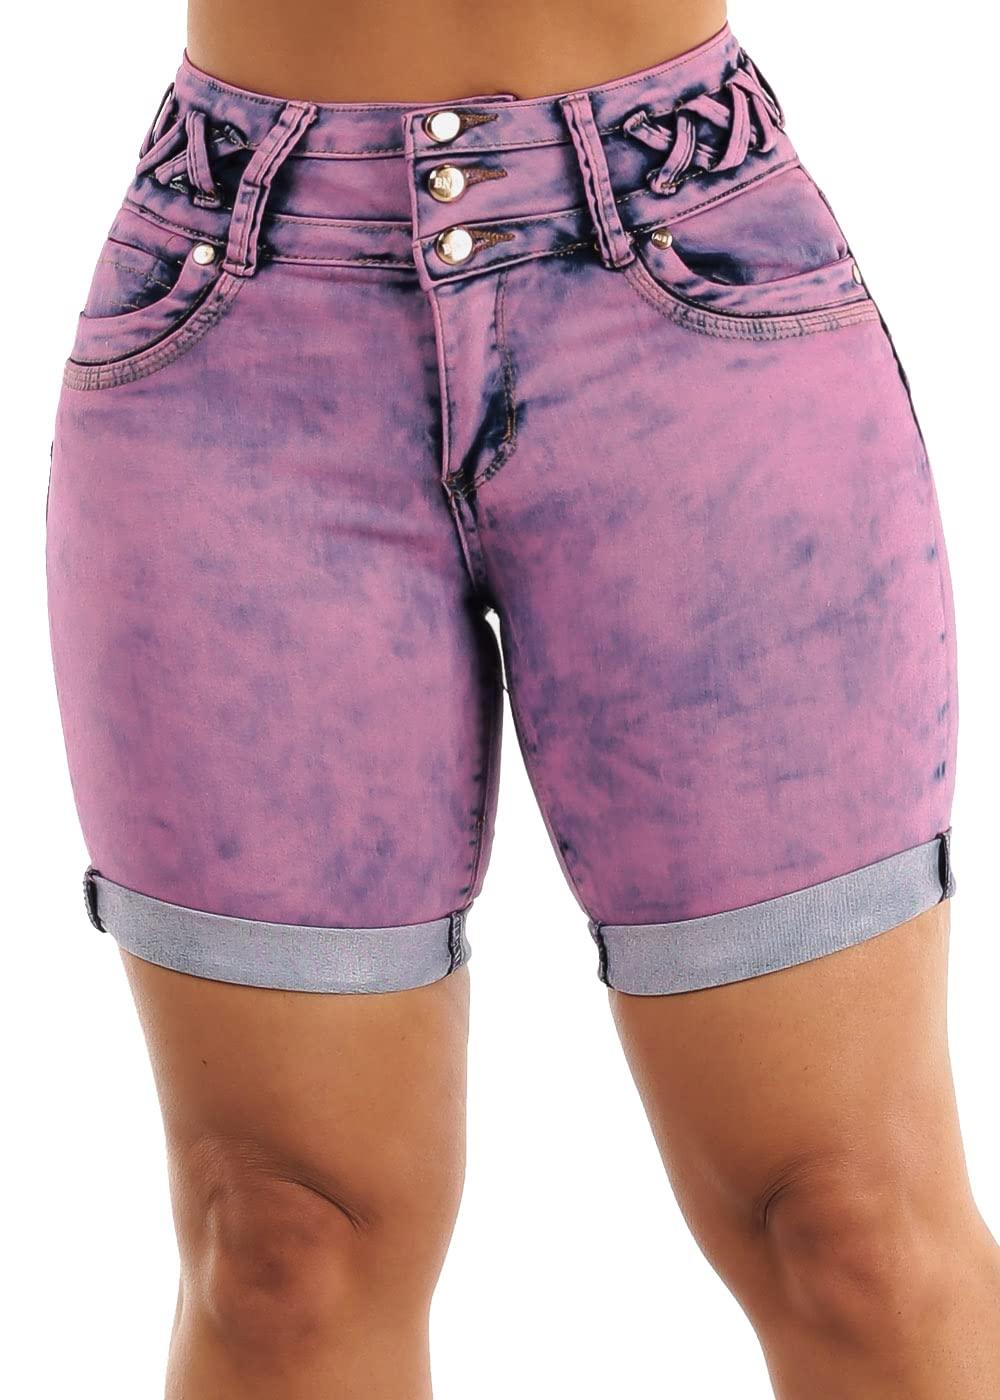 Moda Xpress Womens Juniors Butt Lifting Acid Purple Mid Thigh Shorts Size 5 10142D - Bona Fide Fashion